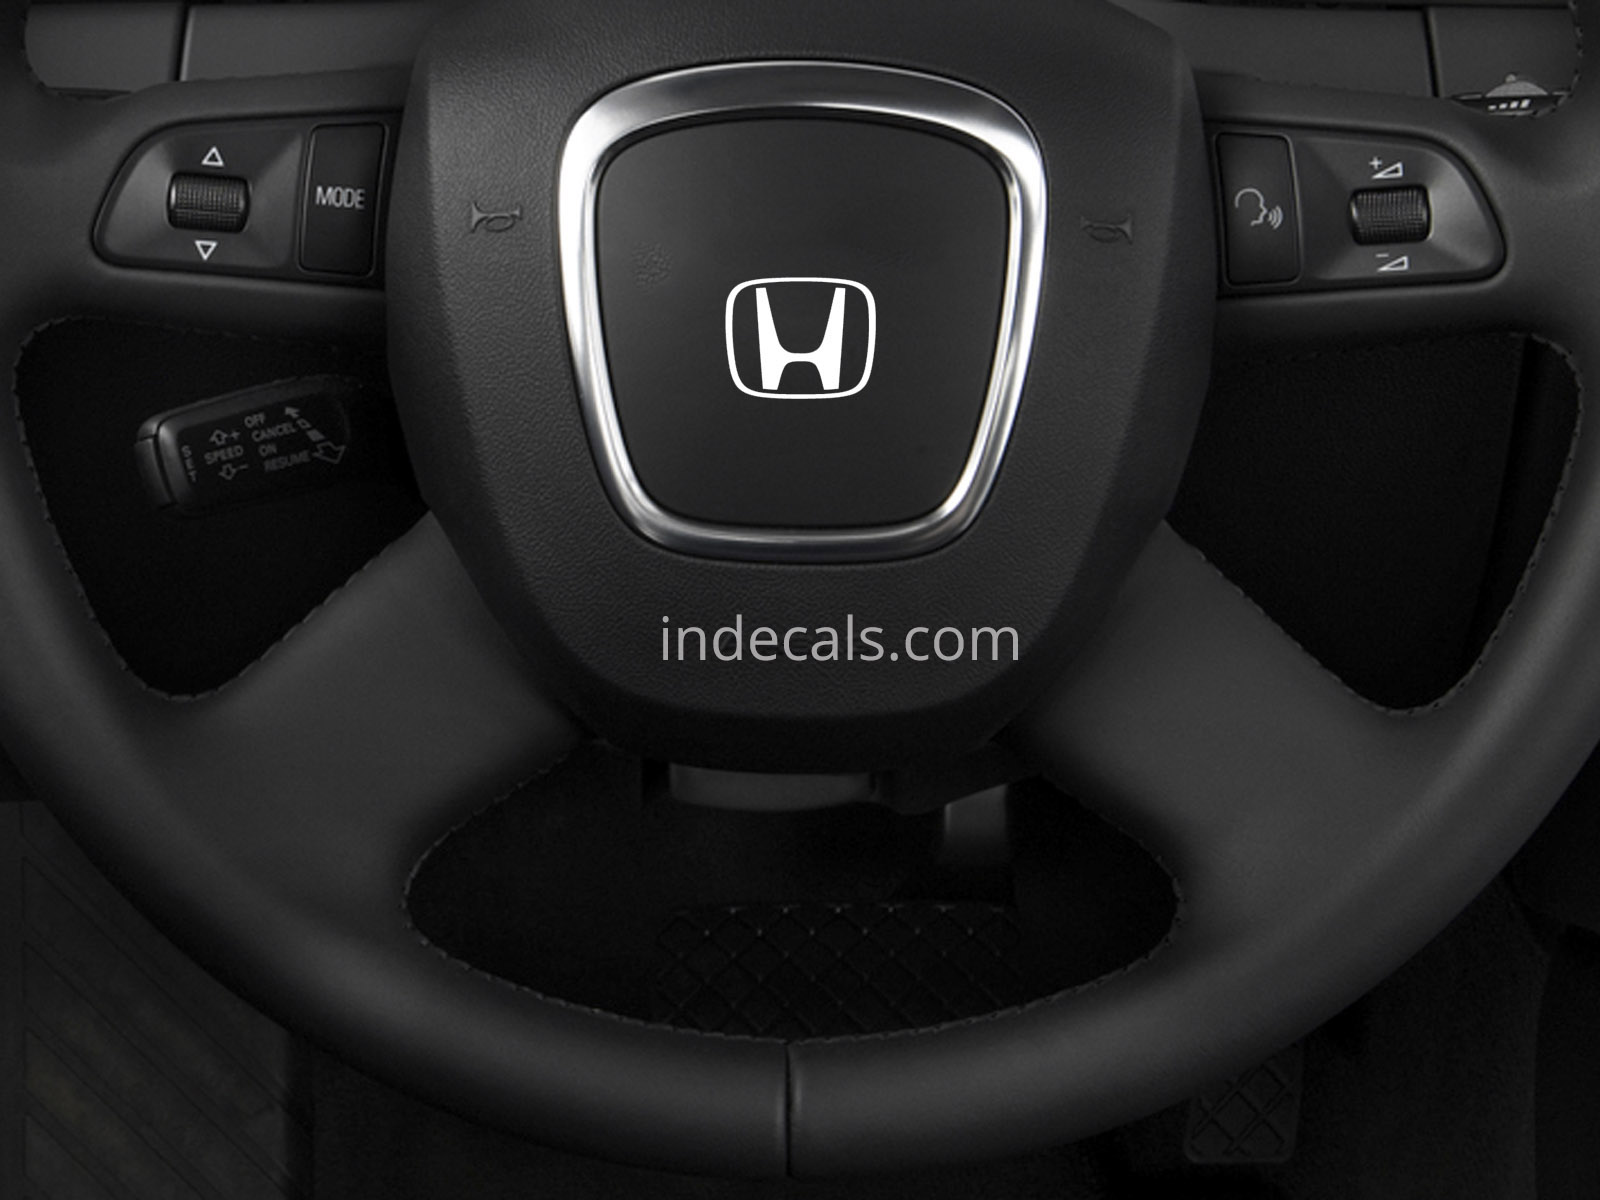 3 x Honda Stickers for Steering Wheel - White